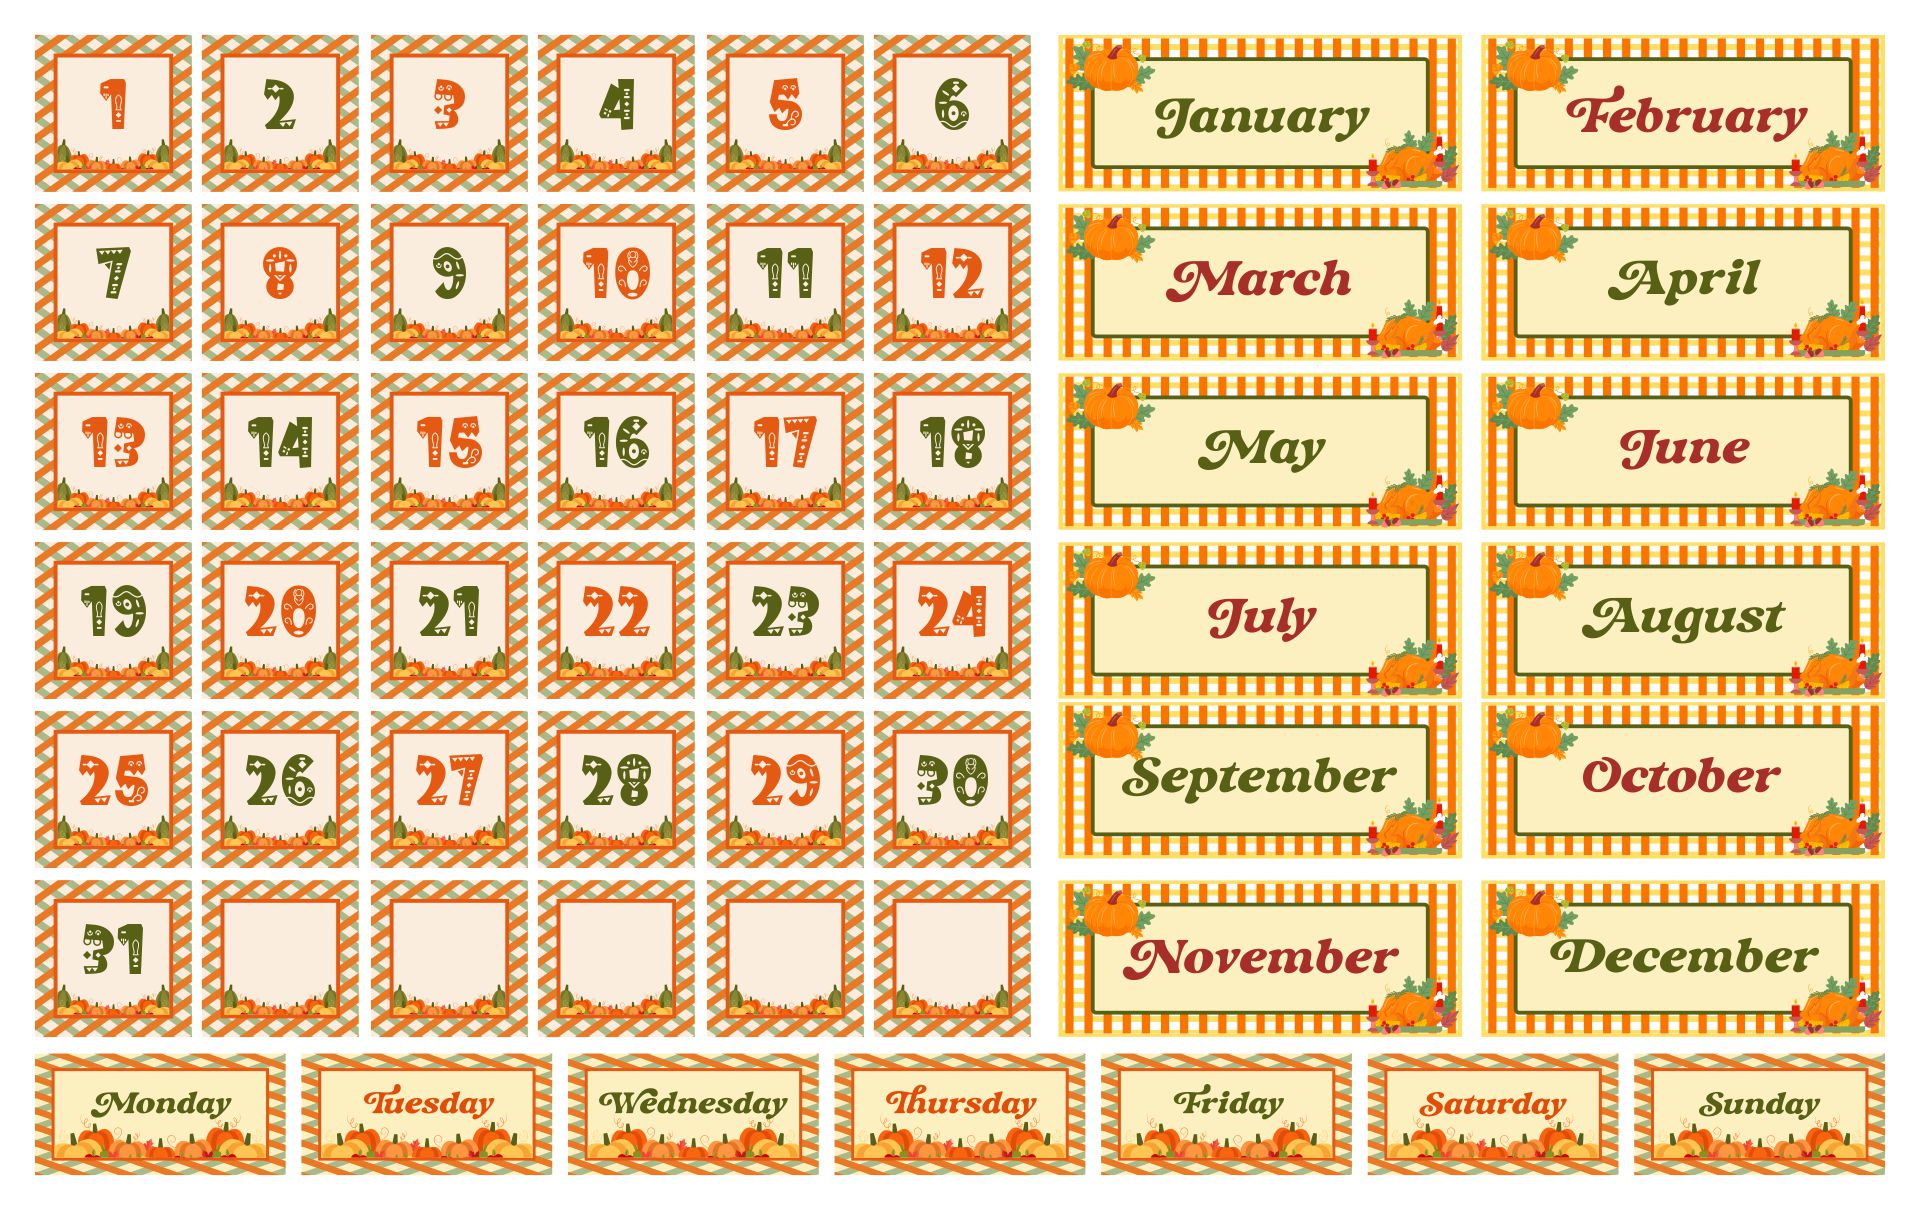 2012 Calendar Printable One Page